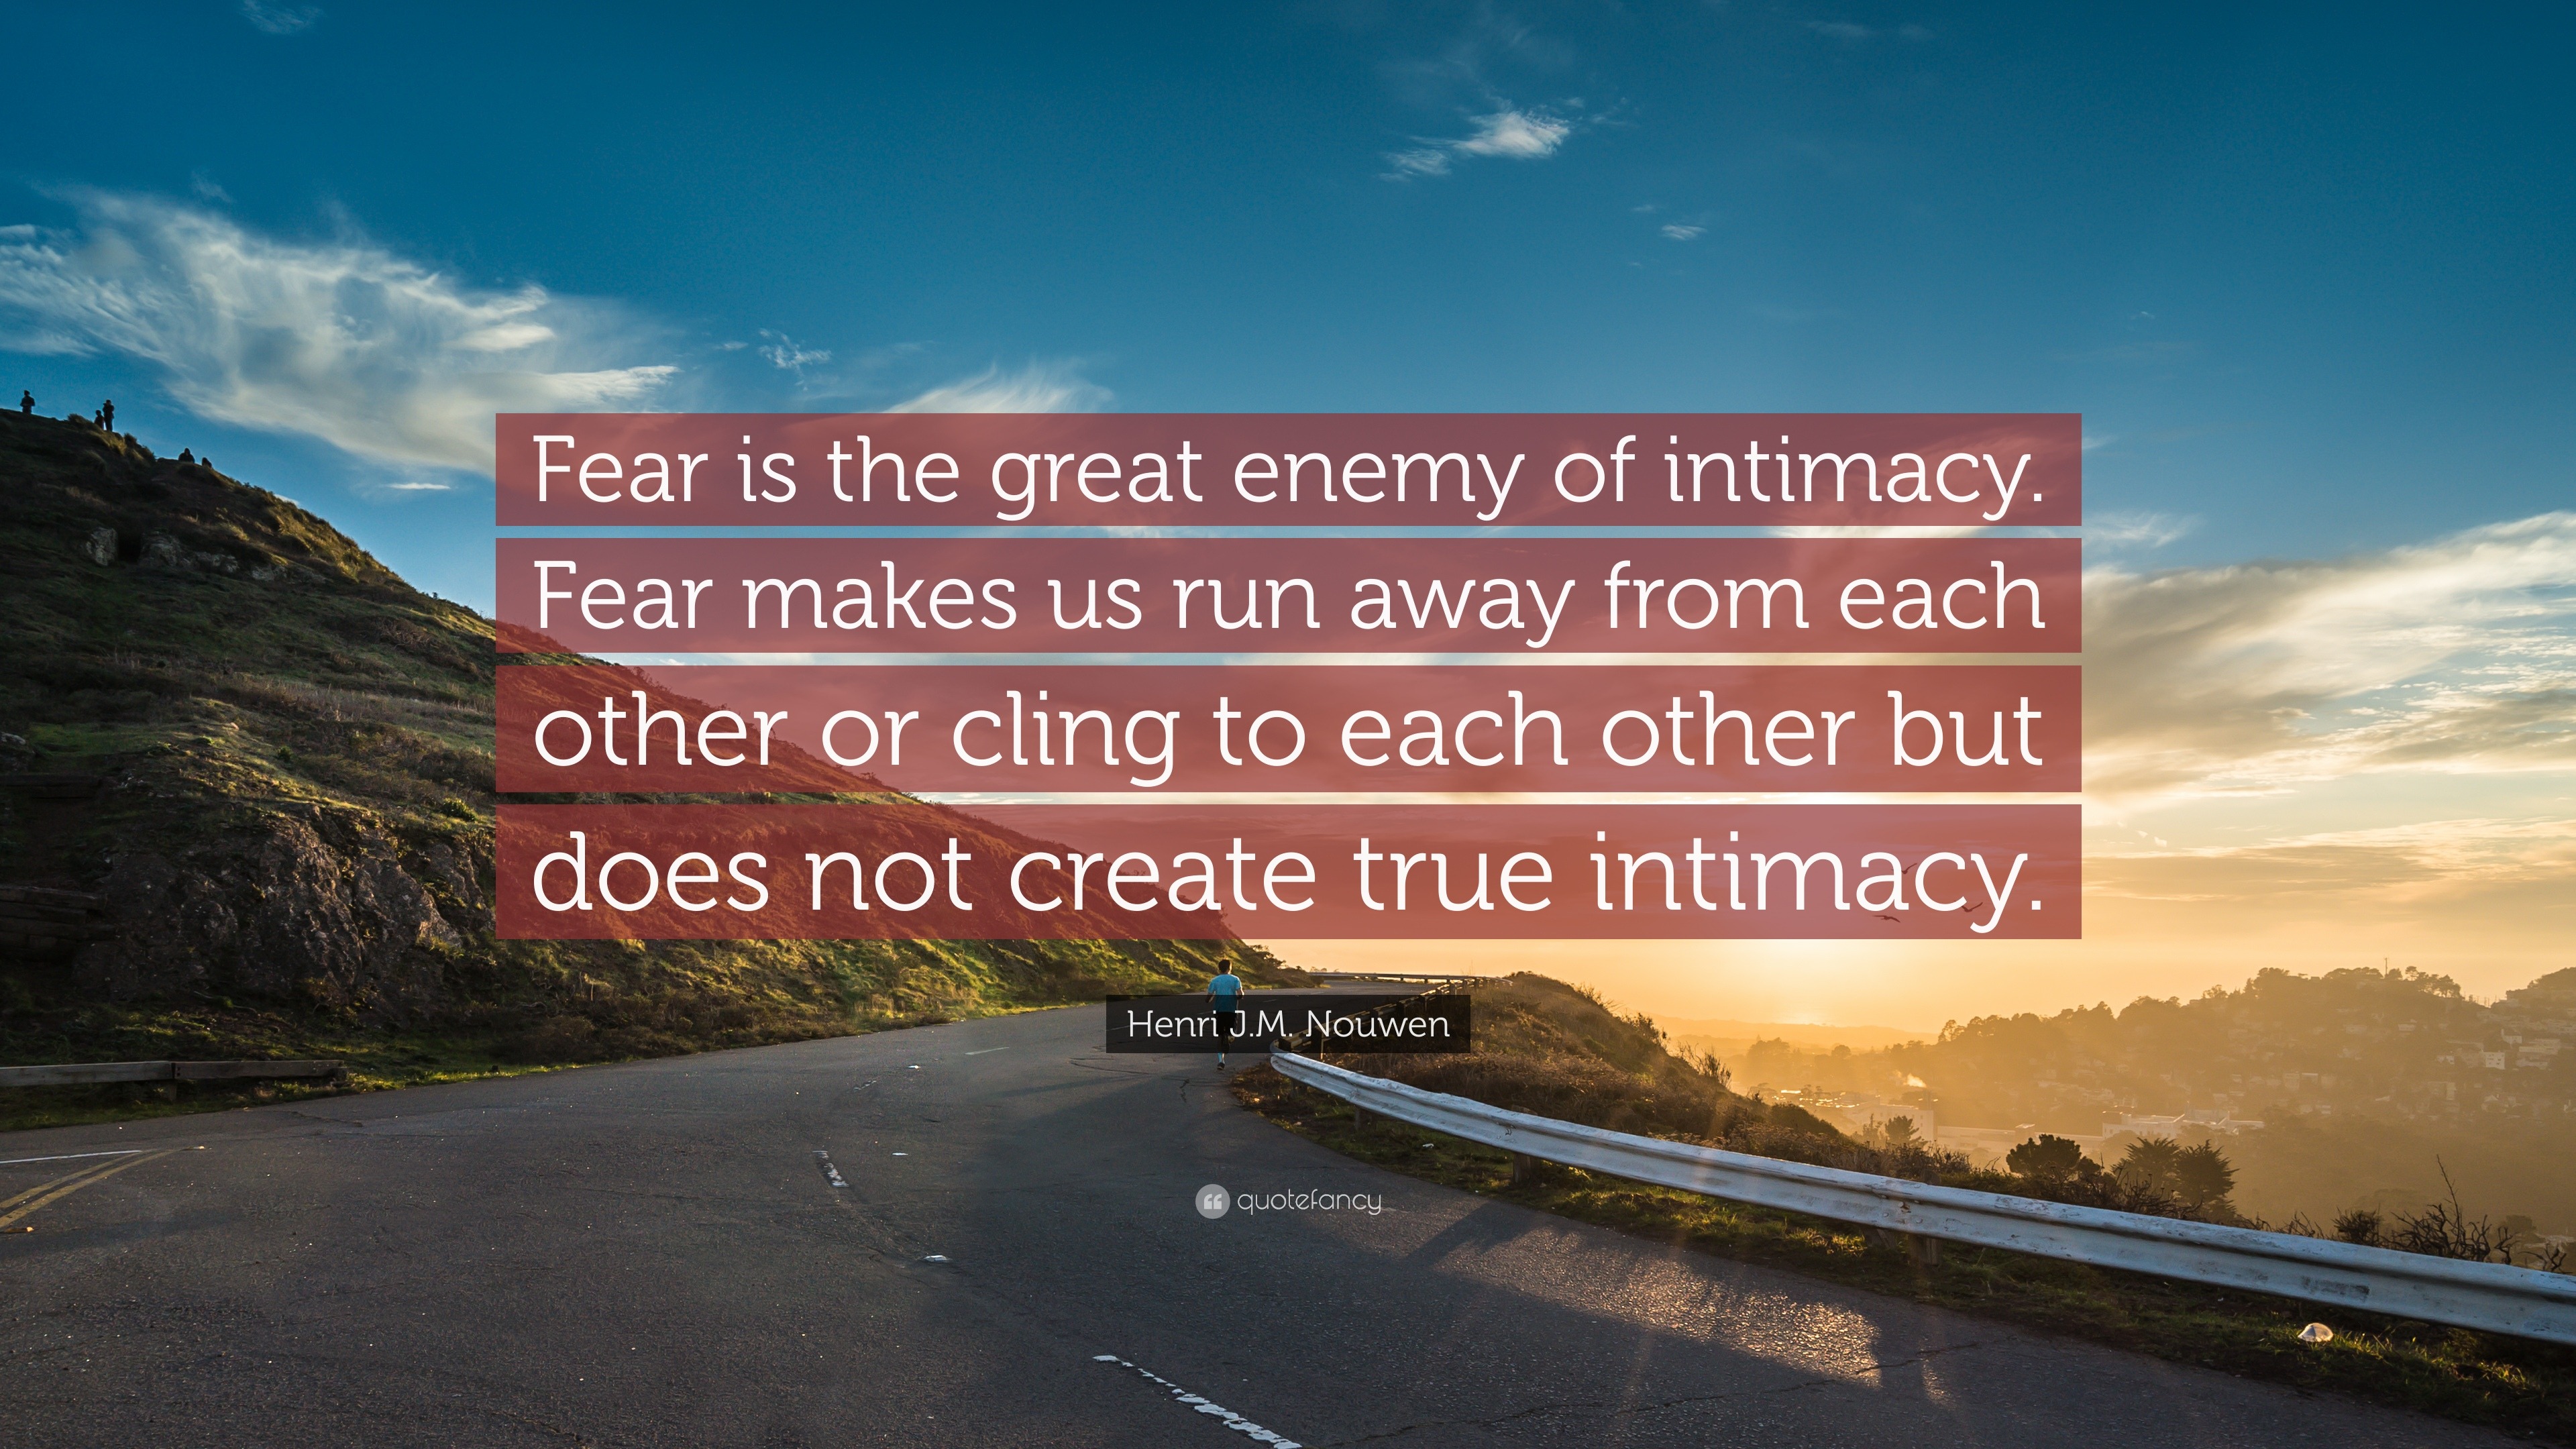 Henri J M Nouwen Quote “fear Is The Great Enemy Of Intimacy Fear